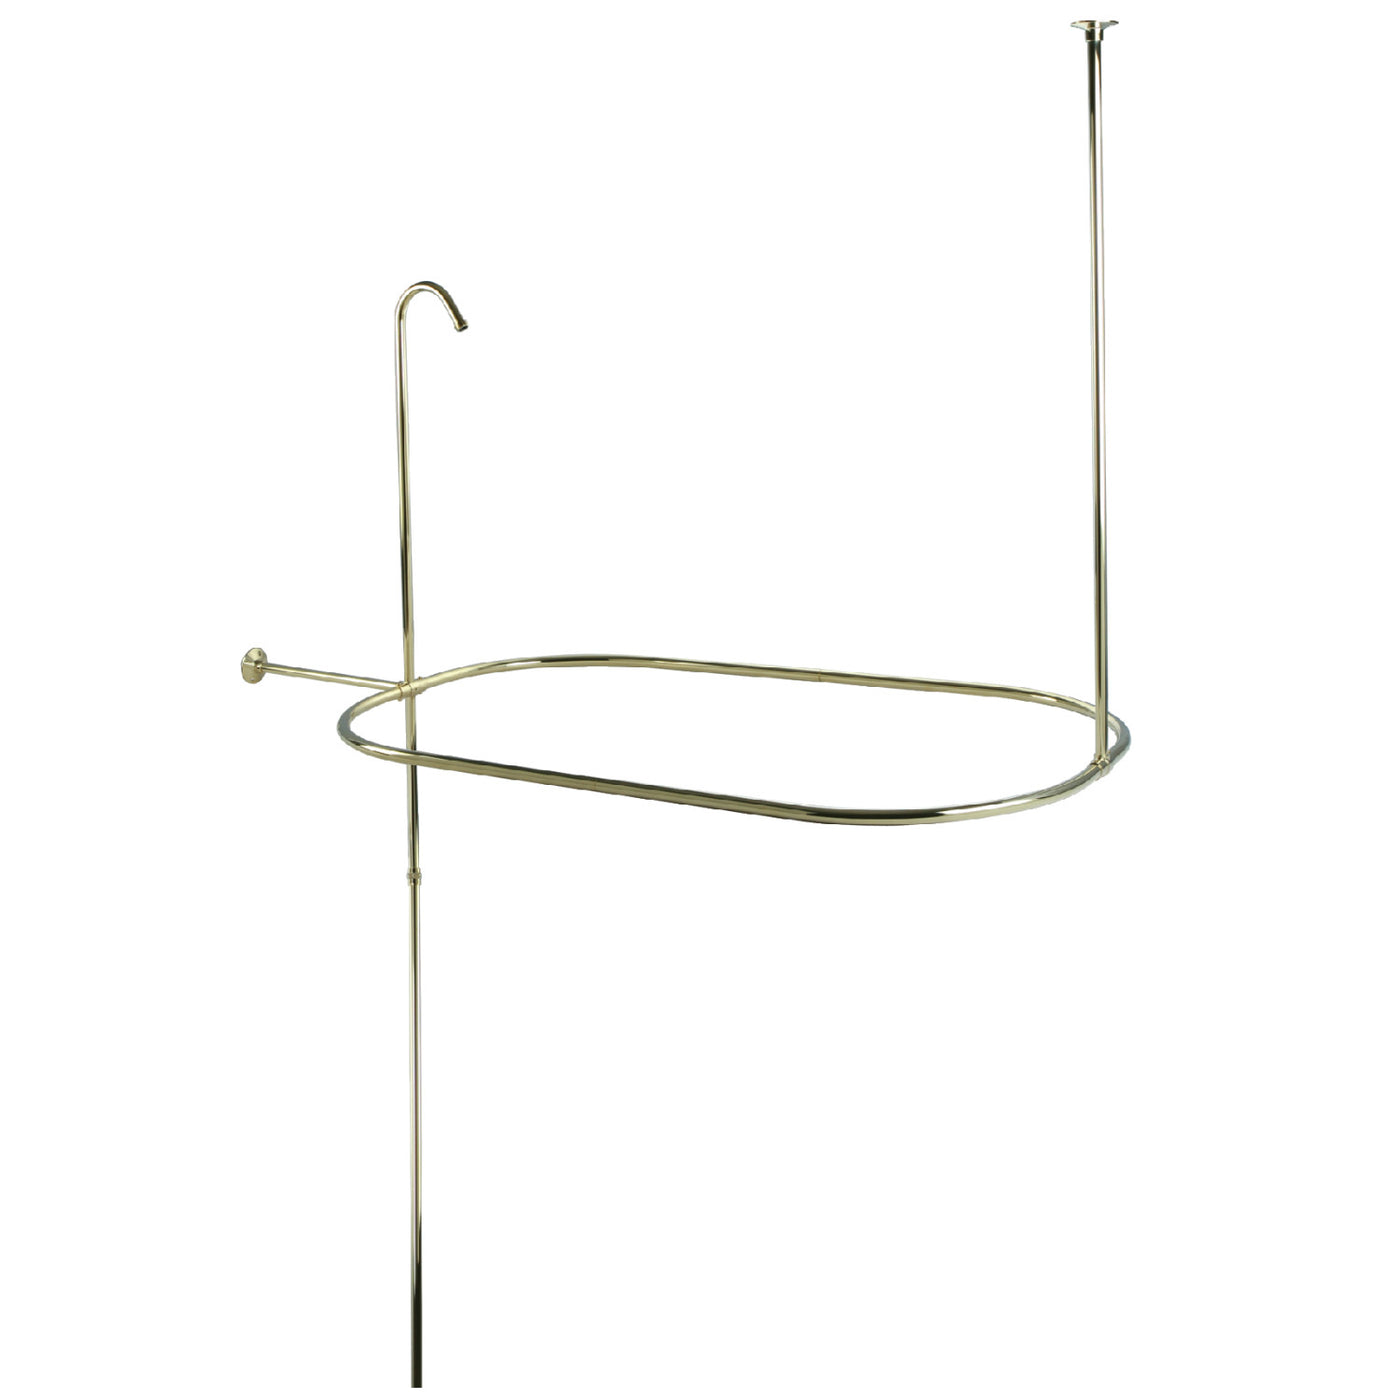 Elements of Design ED10402 Oval Shower Riser with Enclosure, Polished Brass